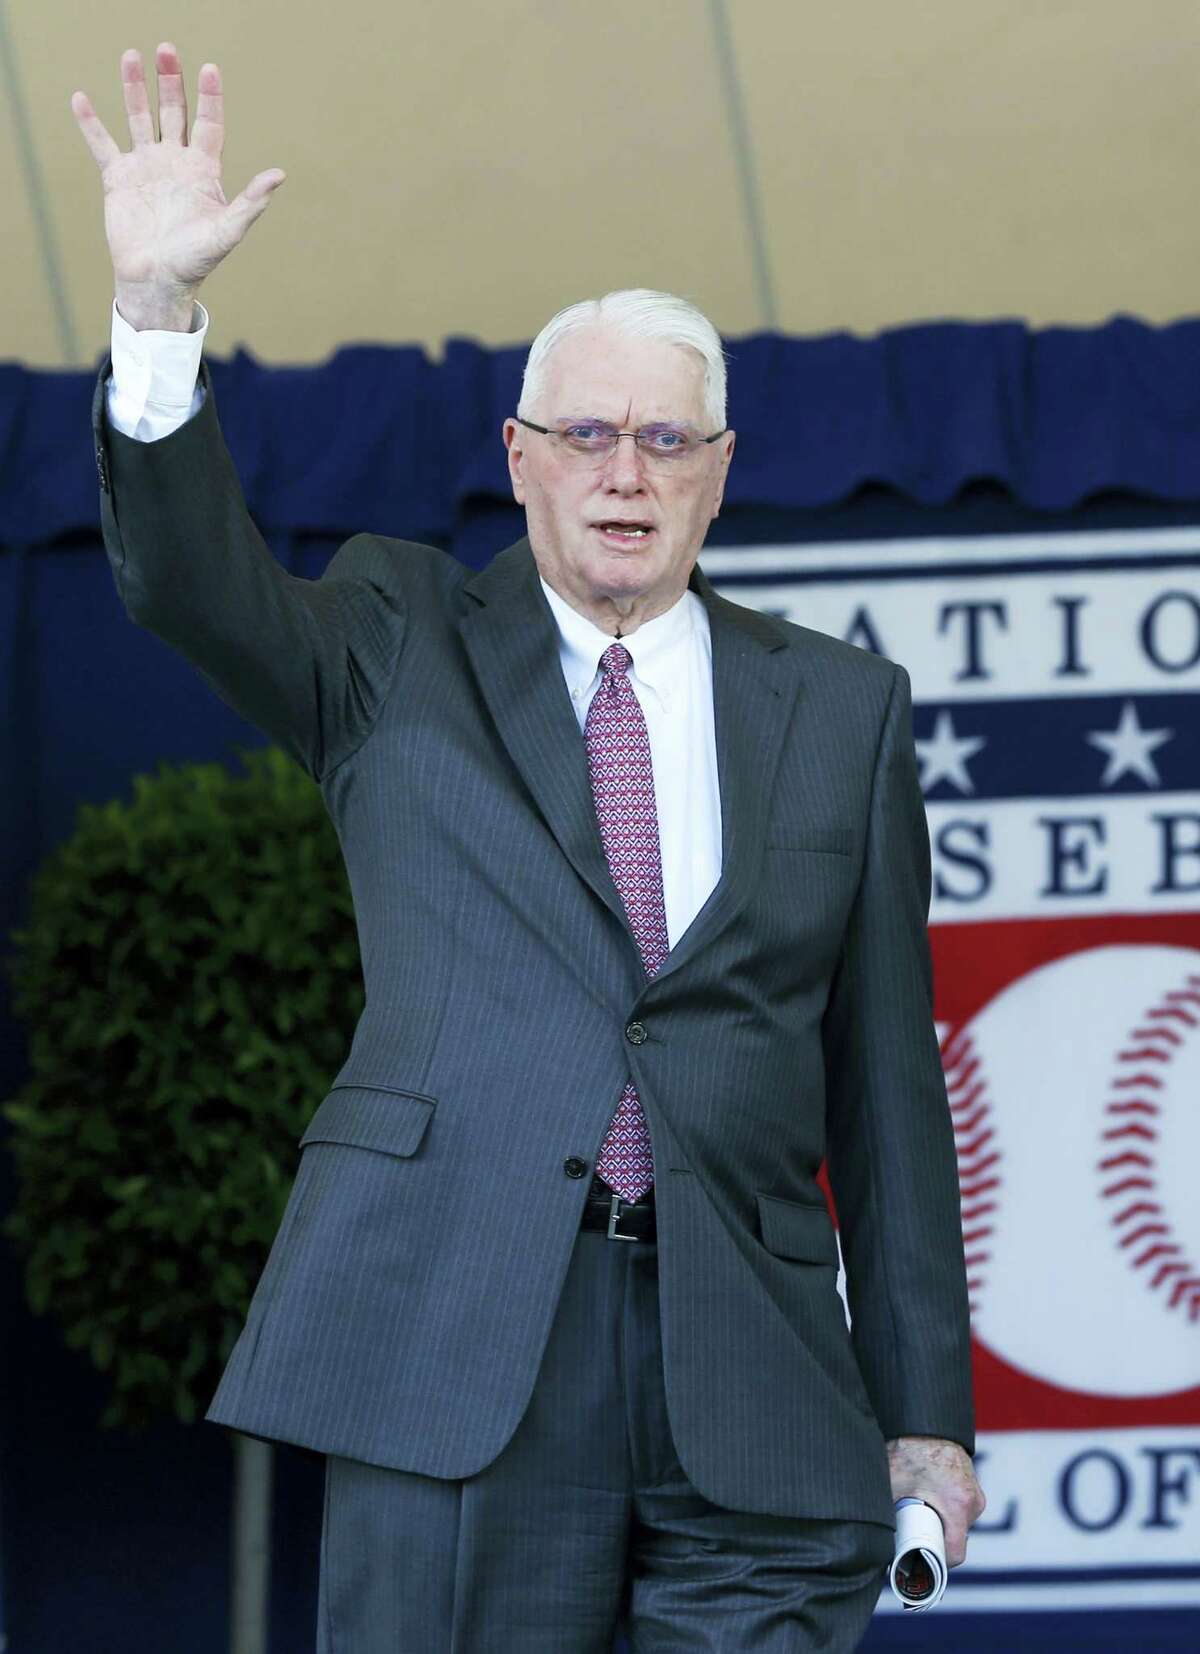 National Baseball Hall of Famer Jim Bunning has died.